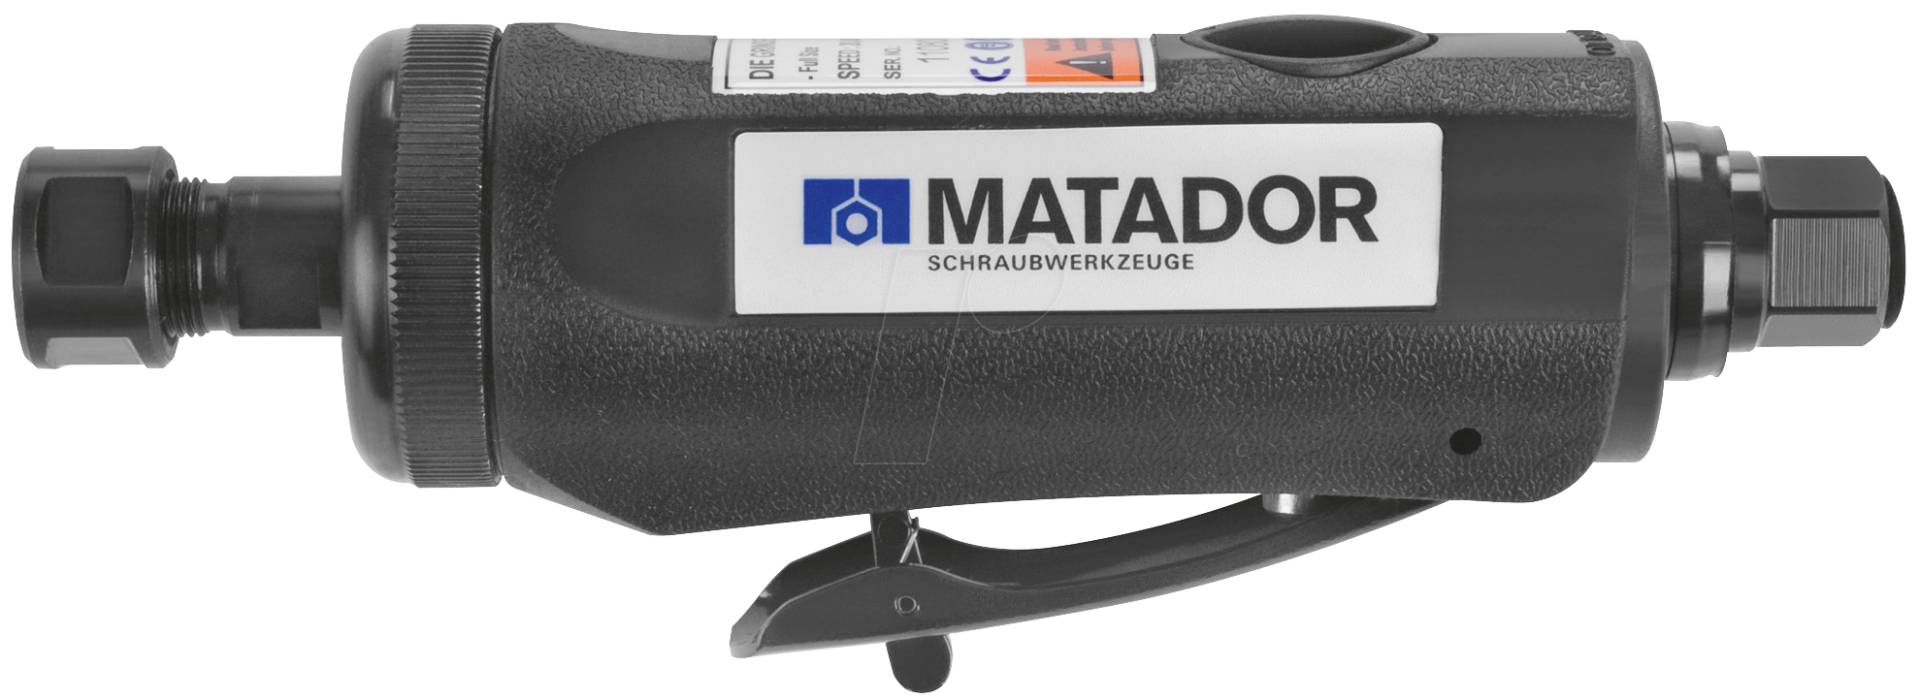 MAT 7004 0001 - Stabschleifer, gerade von Matador